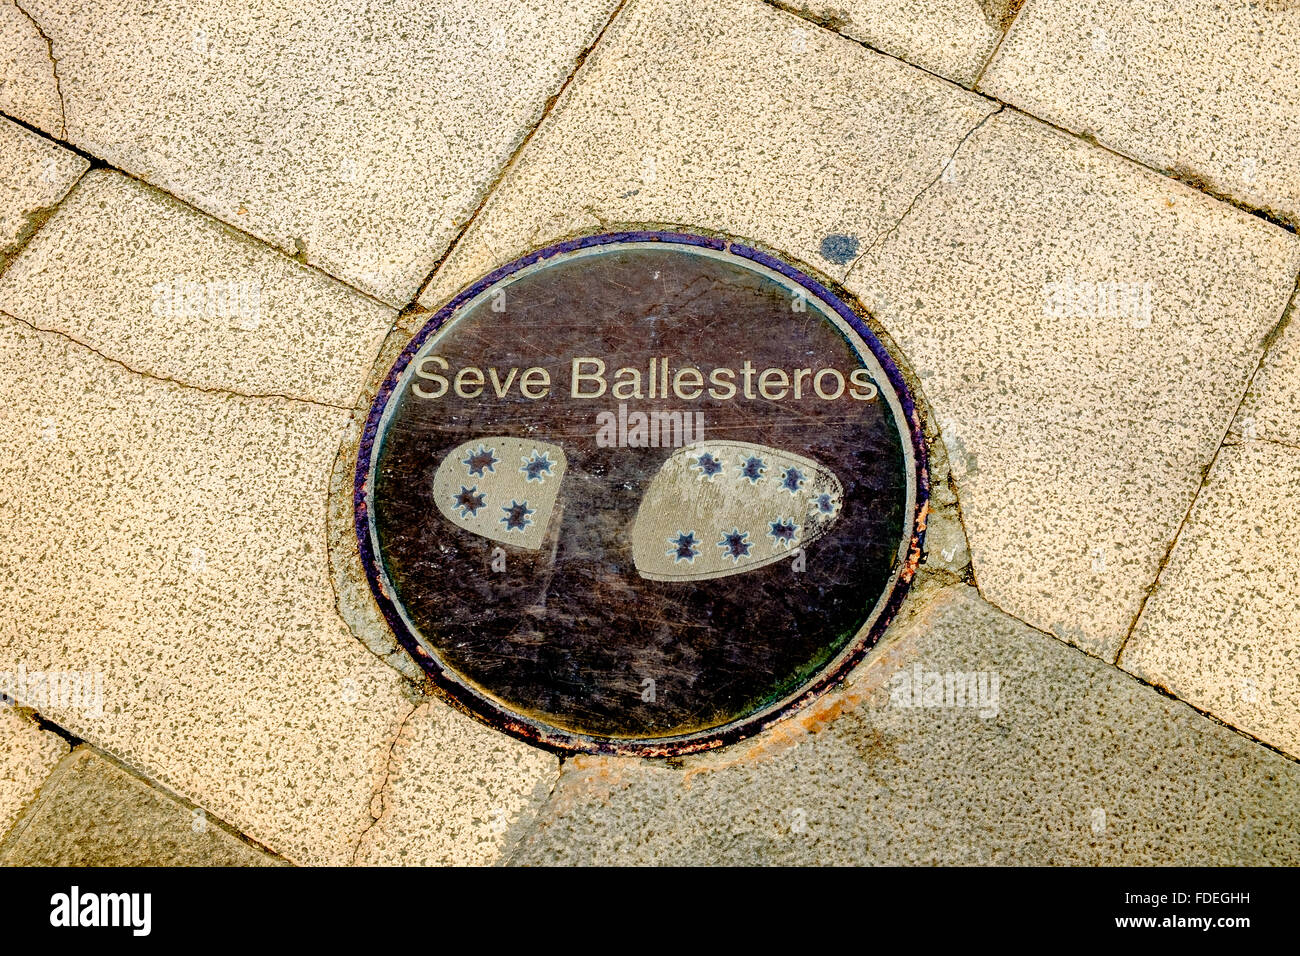 seve ballesteros footprint plaque at olympic park barcelona Stock Photo